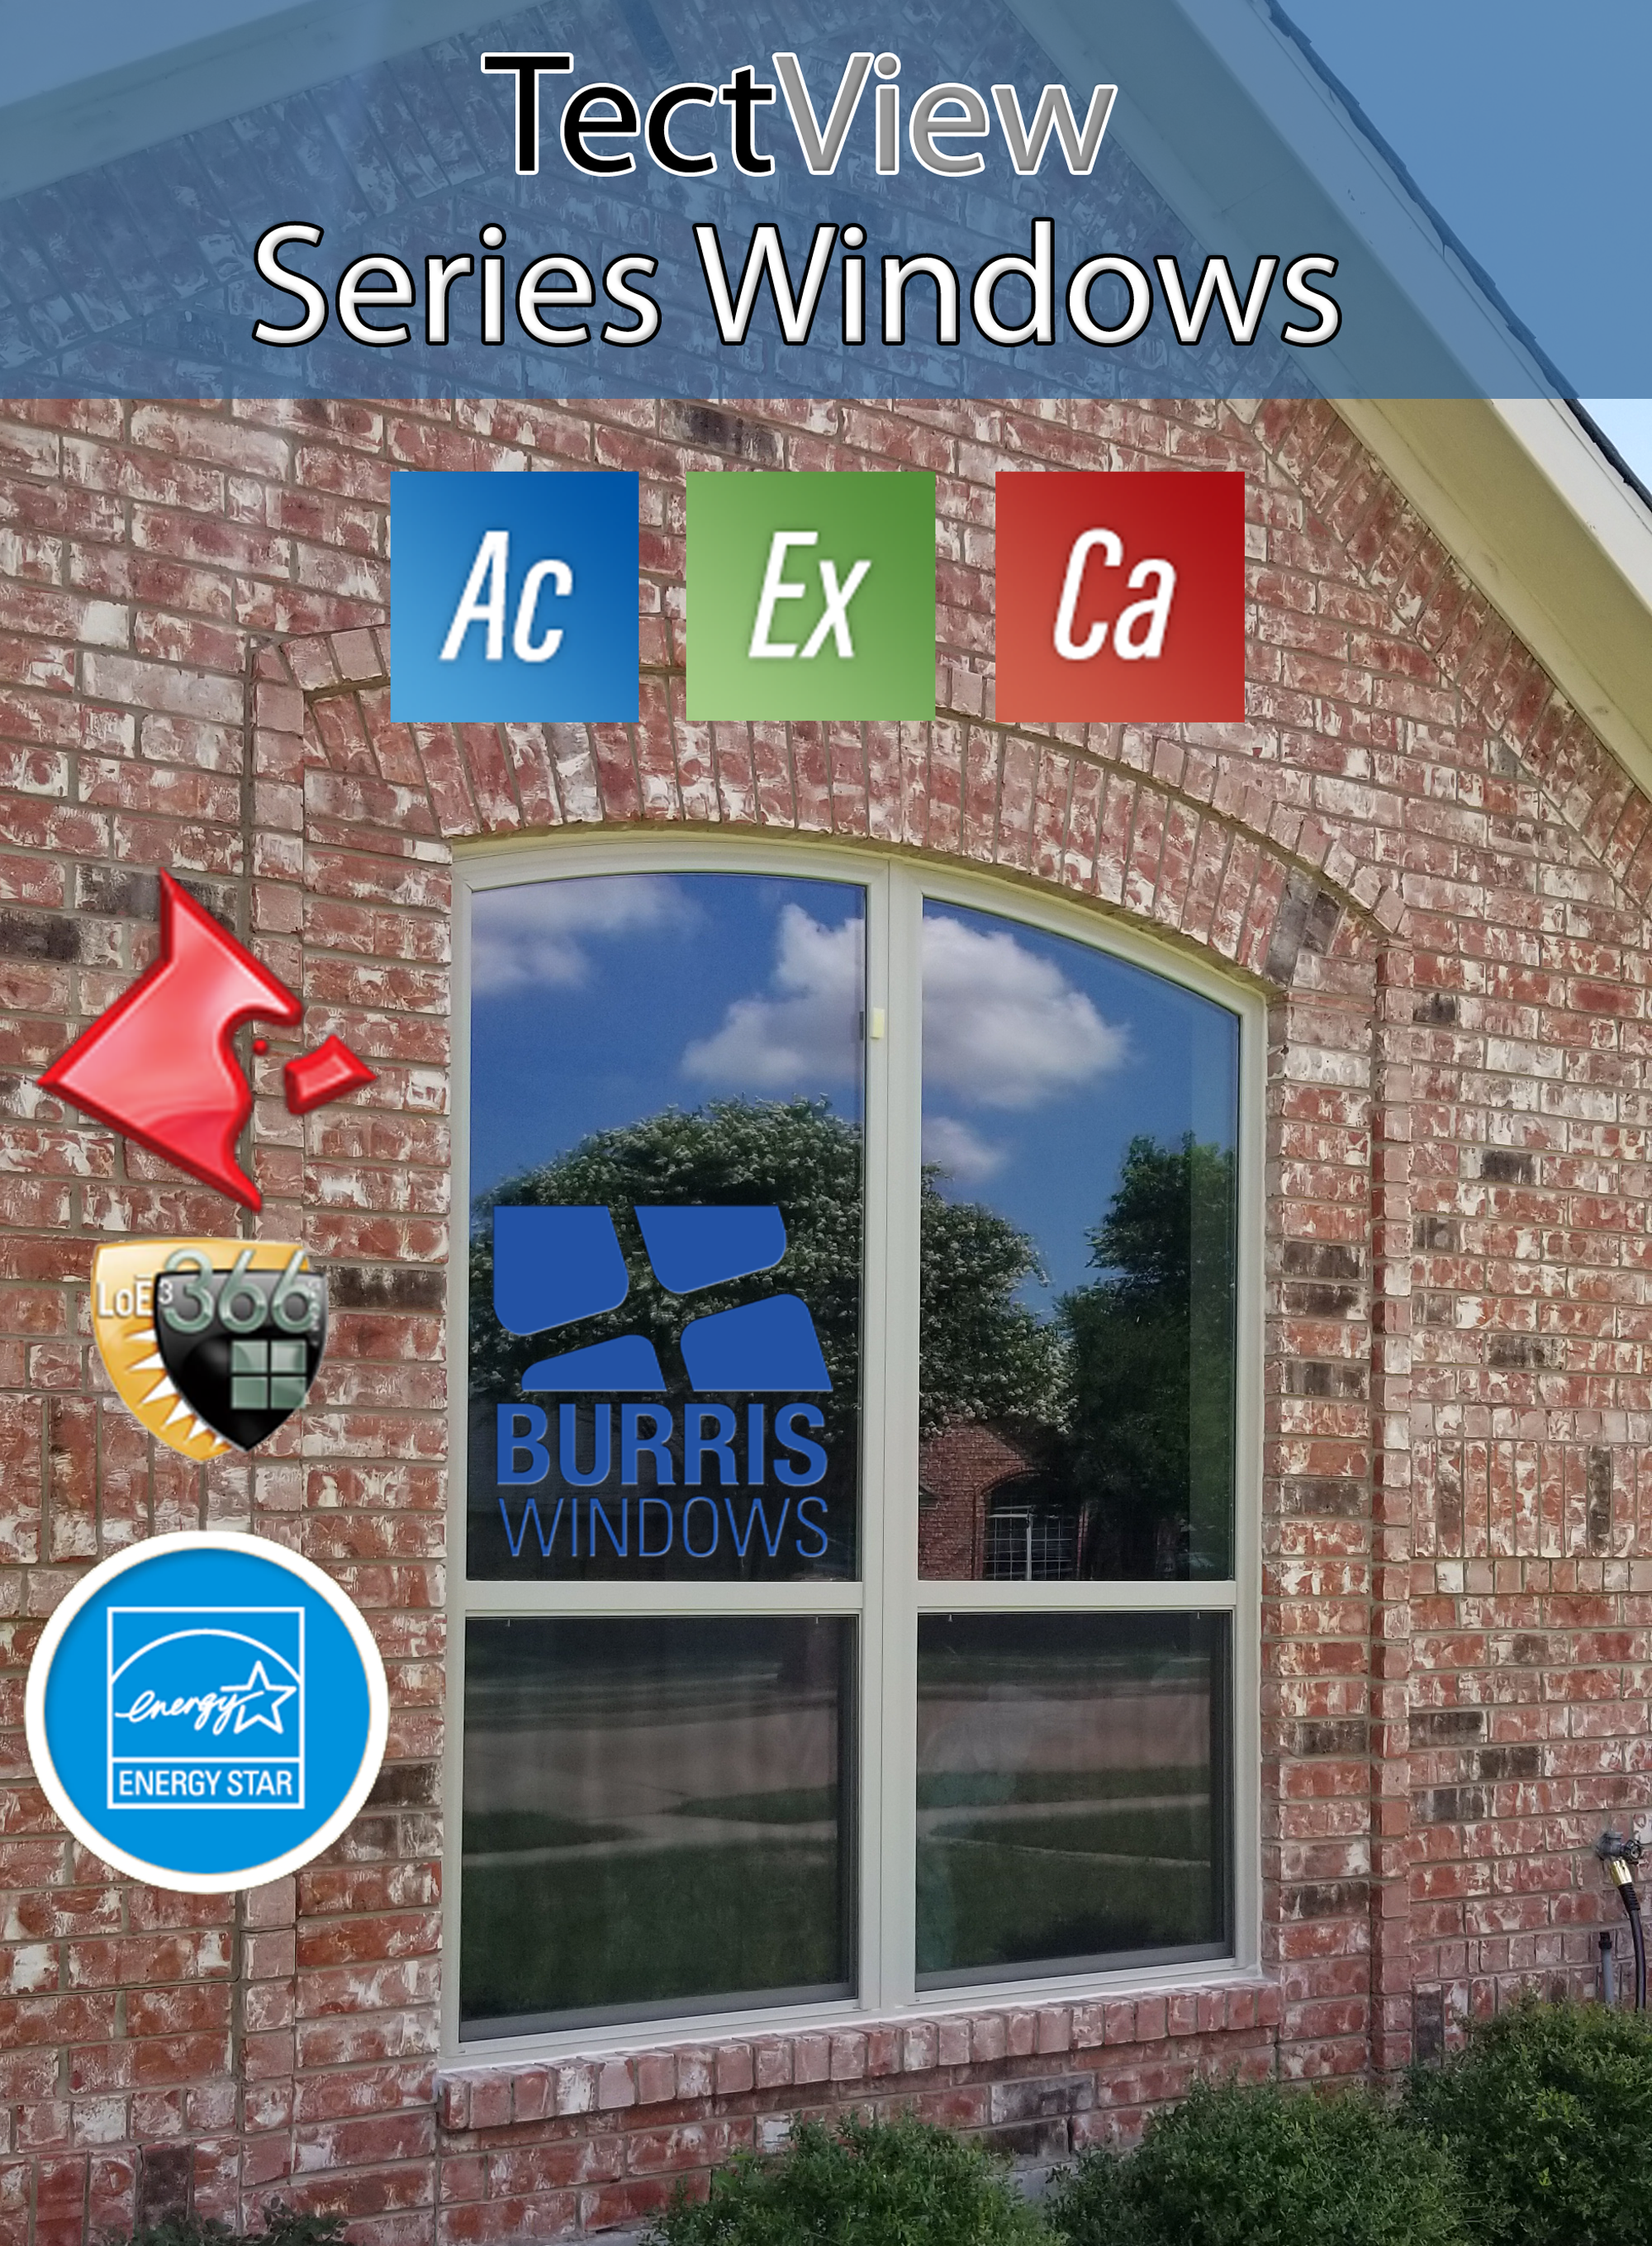 Burris Windows TectView Series by Pella